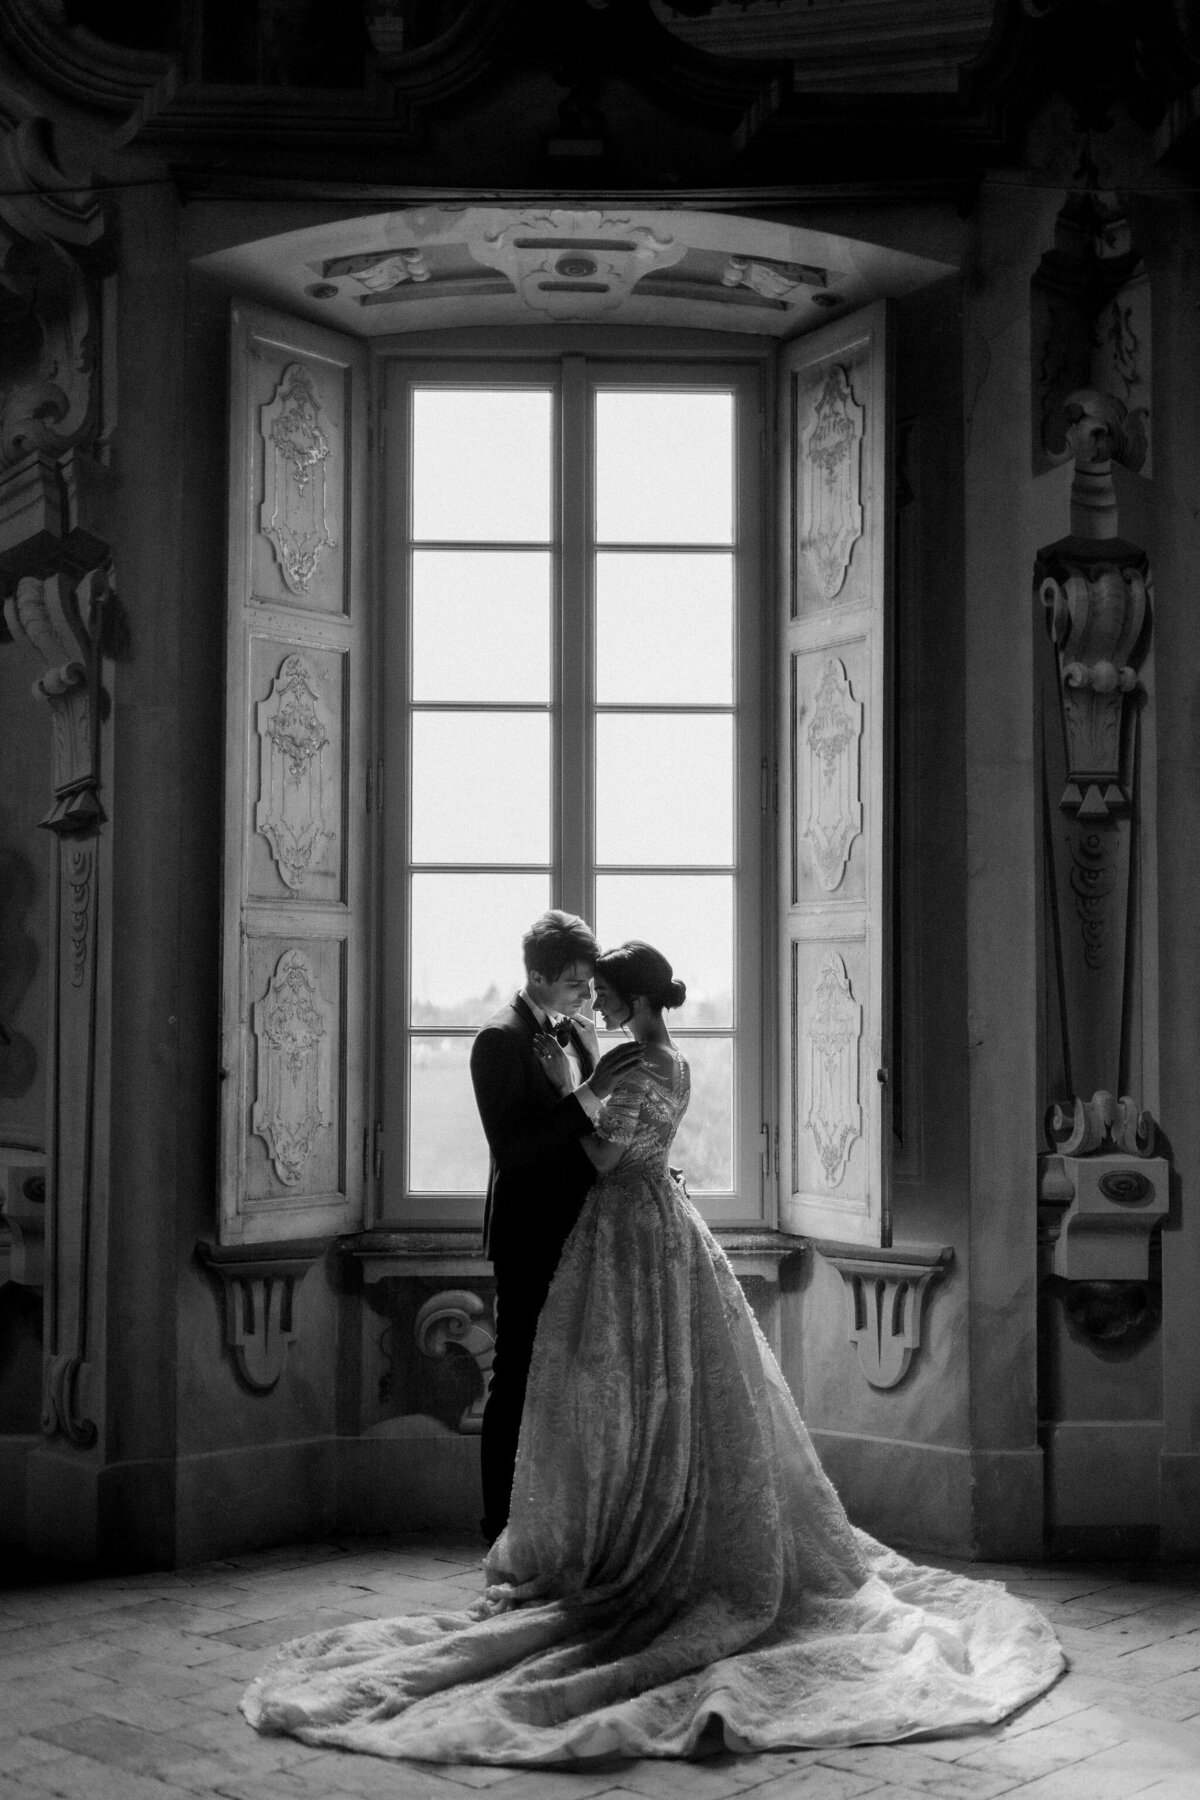 076-Villa-Arconati-Milan-Italy-Cinematic-Romance-Destination-Weddingl-Editorial-Luxury-Fine-Art-Lisa-Vigliotta-Photography